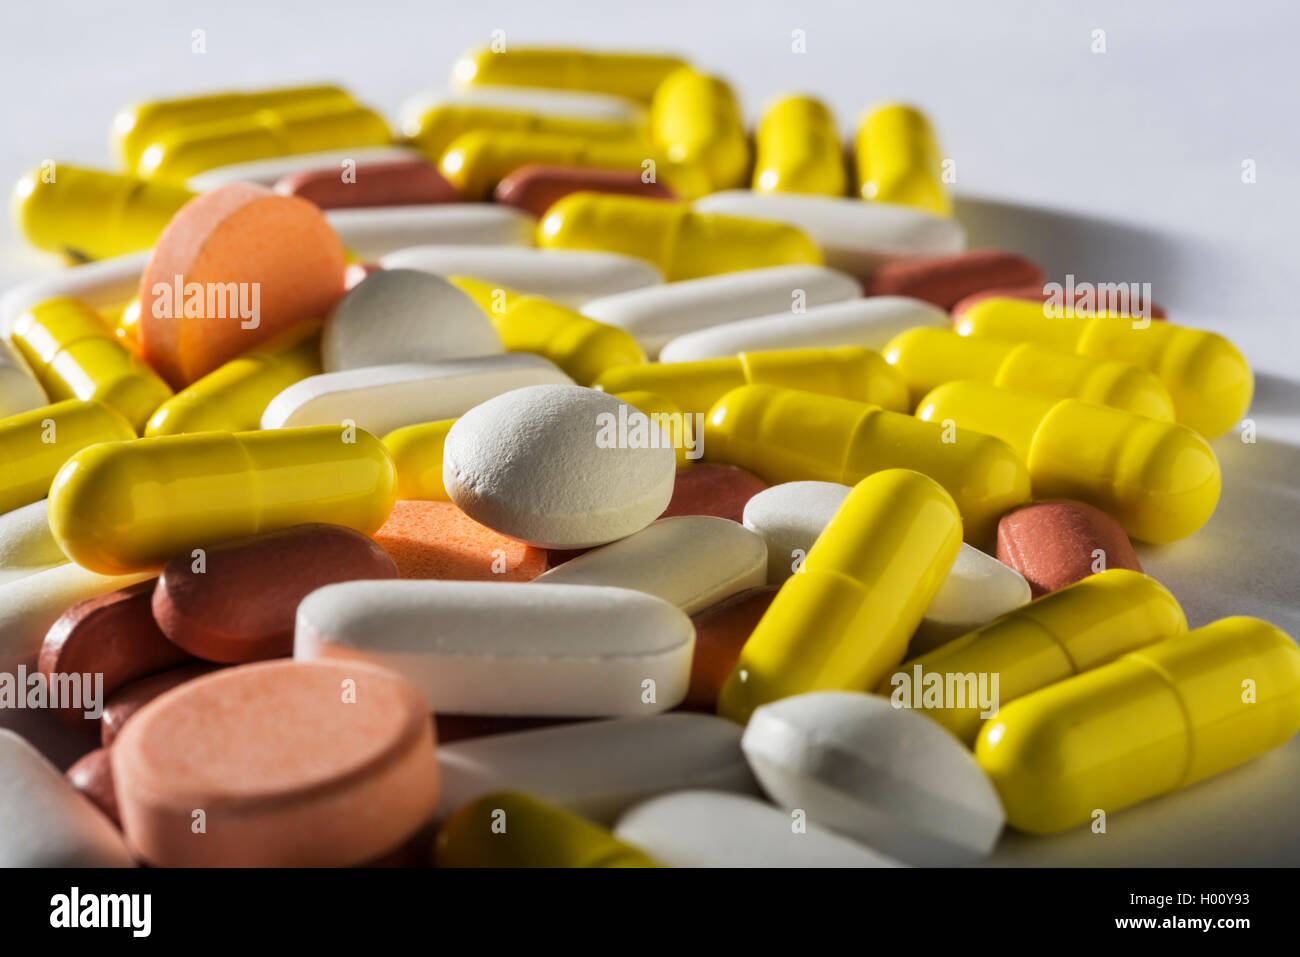 Stapel von verschiedenen bunten Pillen Stockfoto